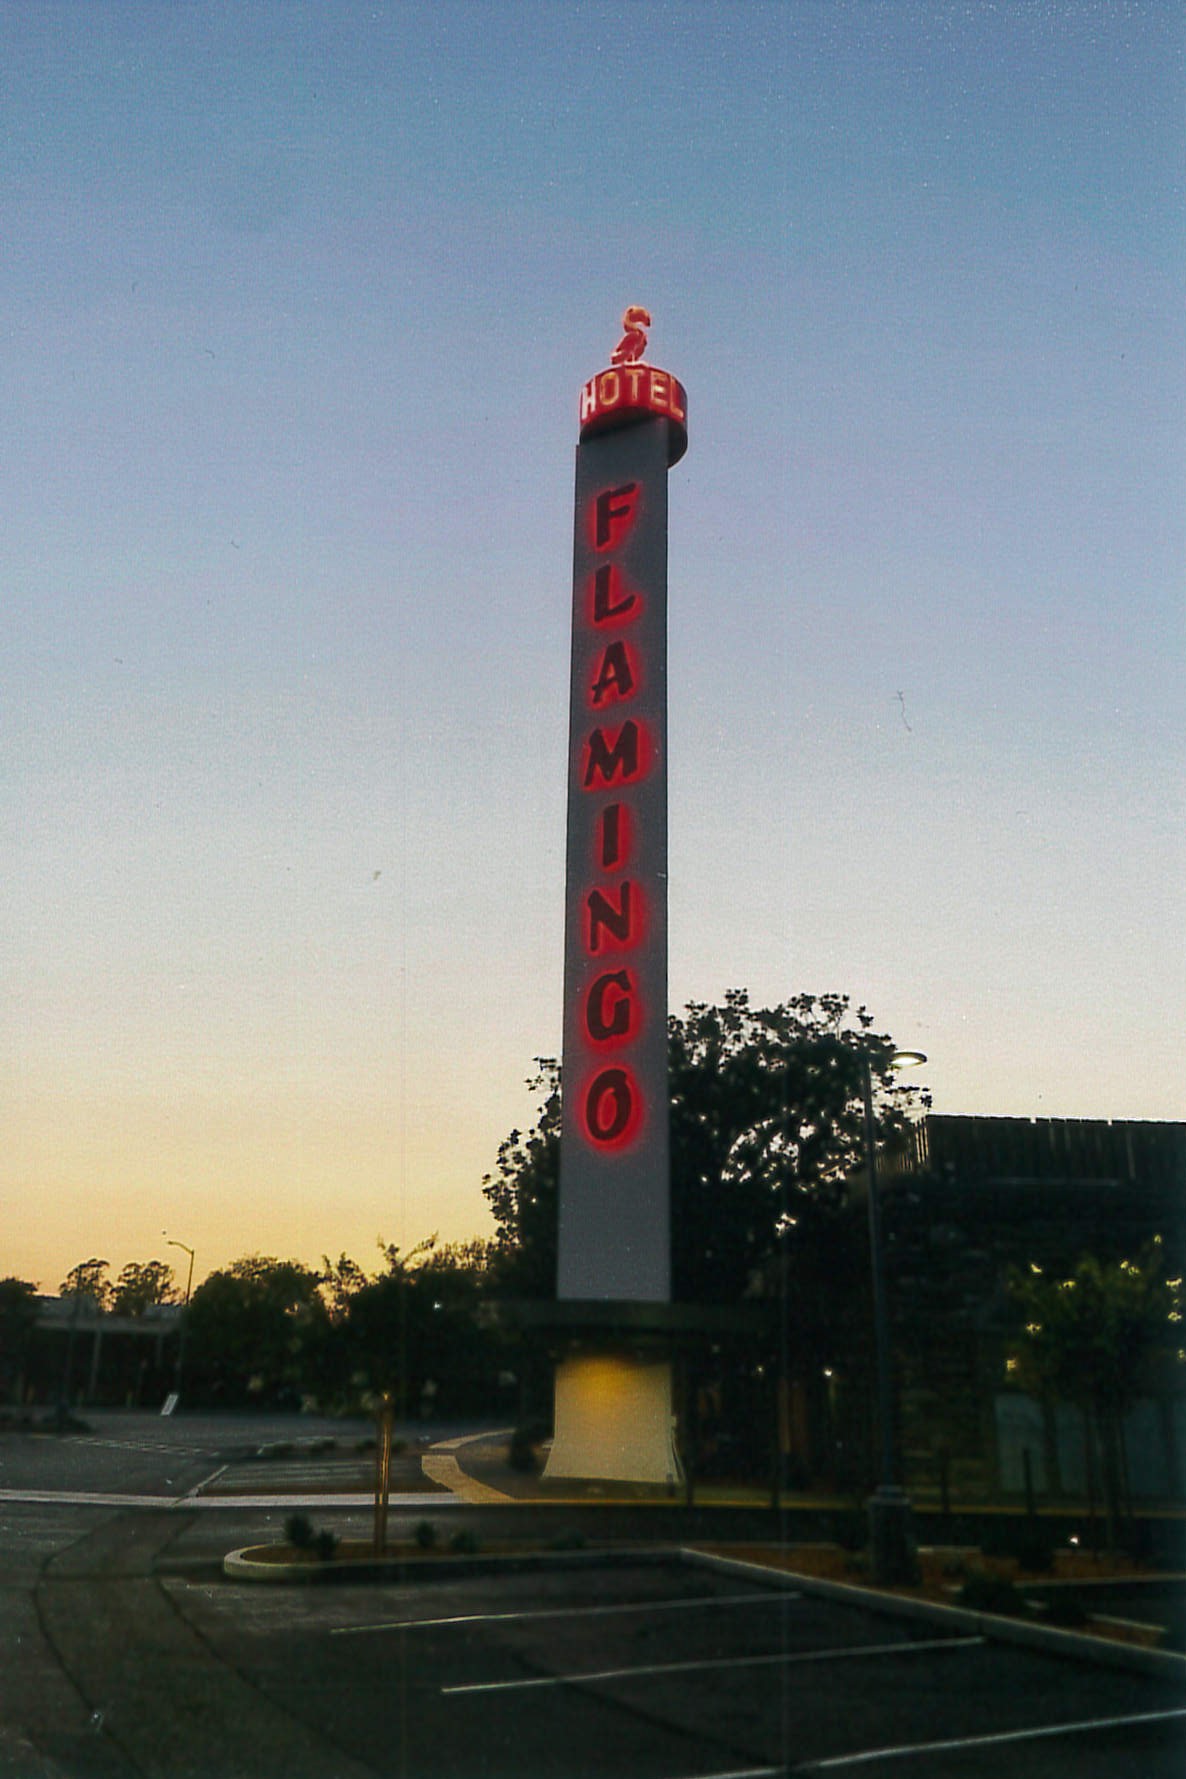 Flamingo Resort Neon pylon sign at dusk